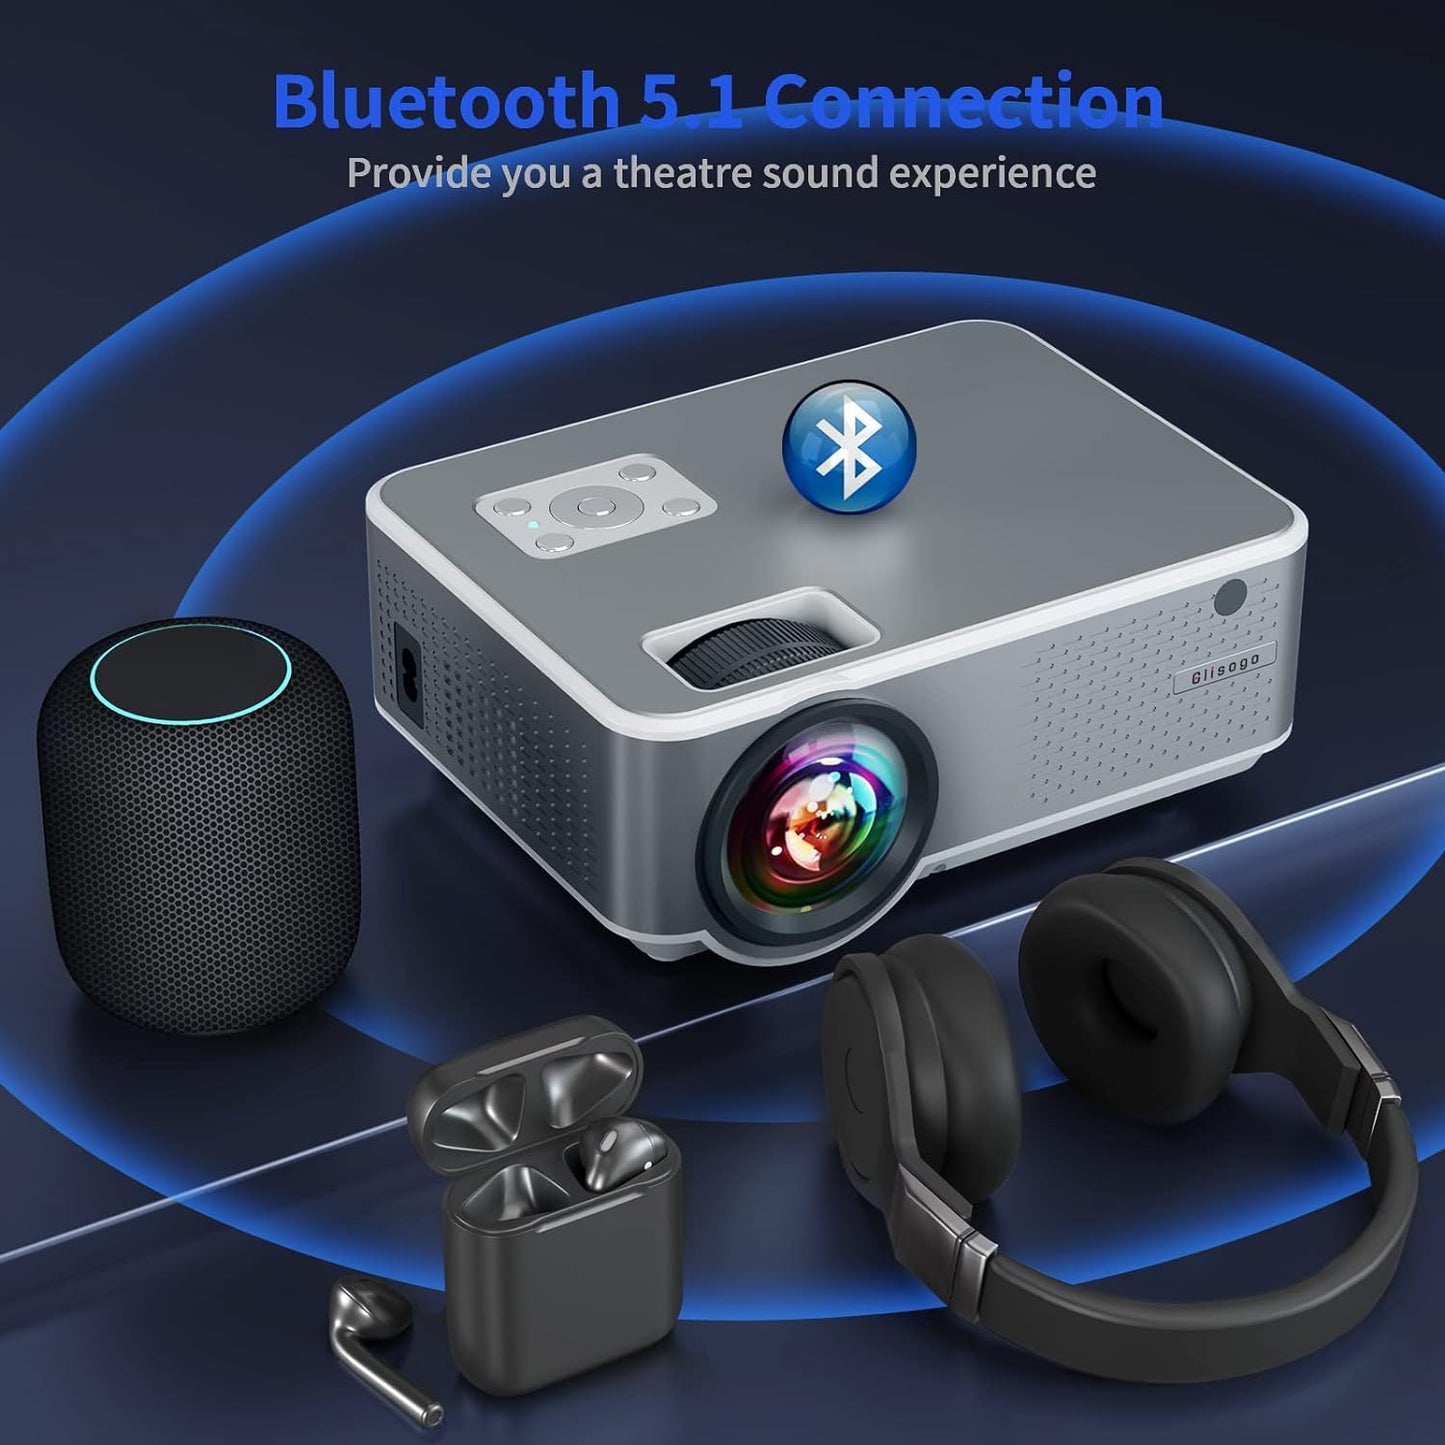 5G WiFi Bluetooth Projector